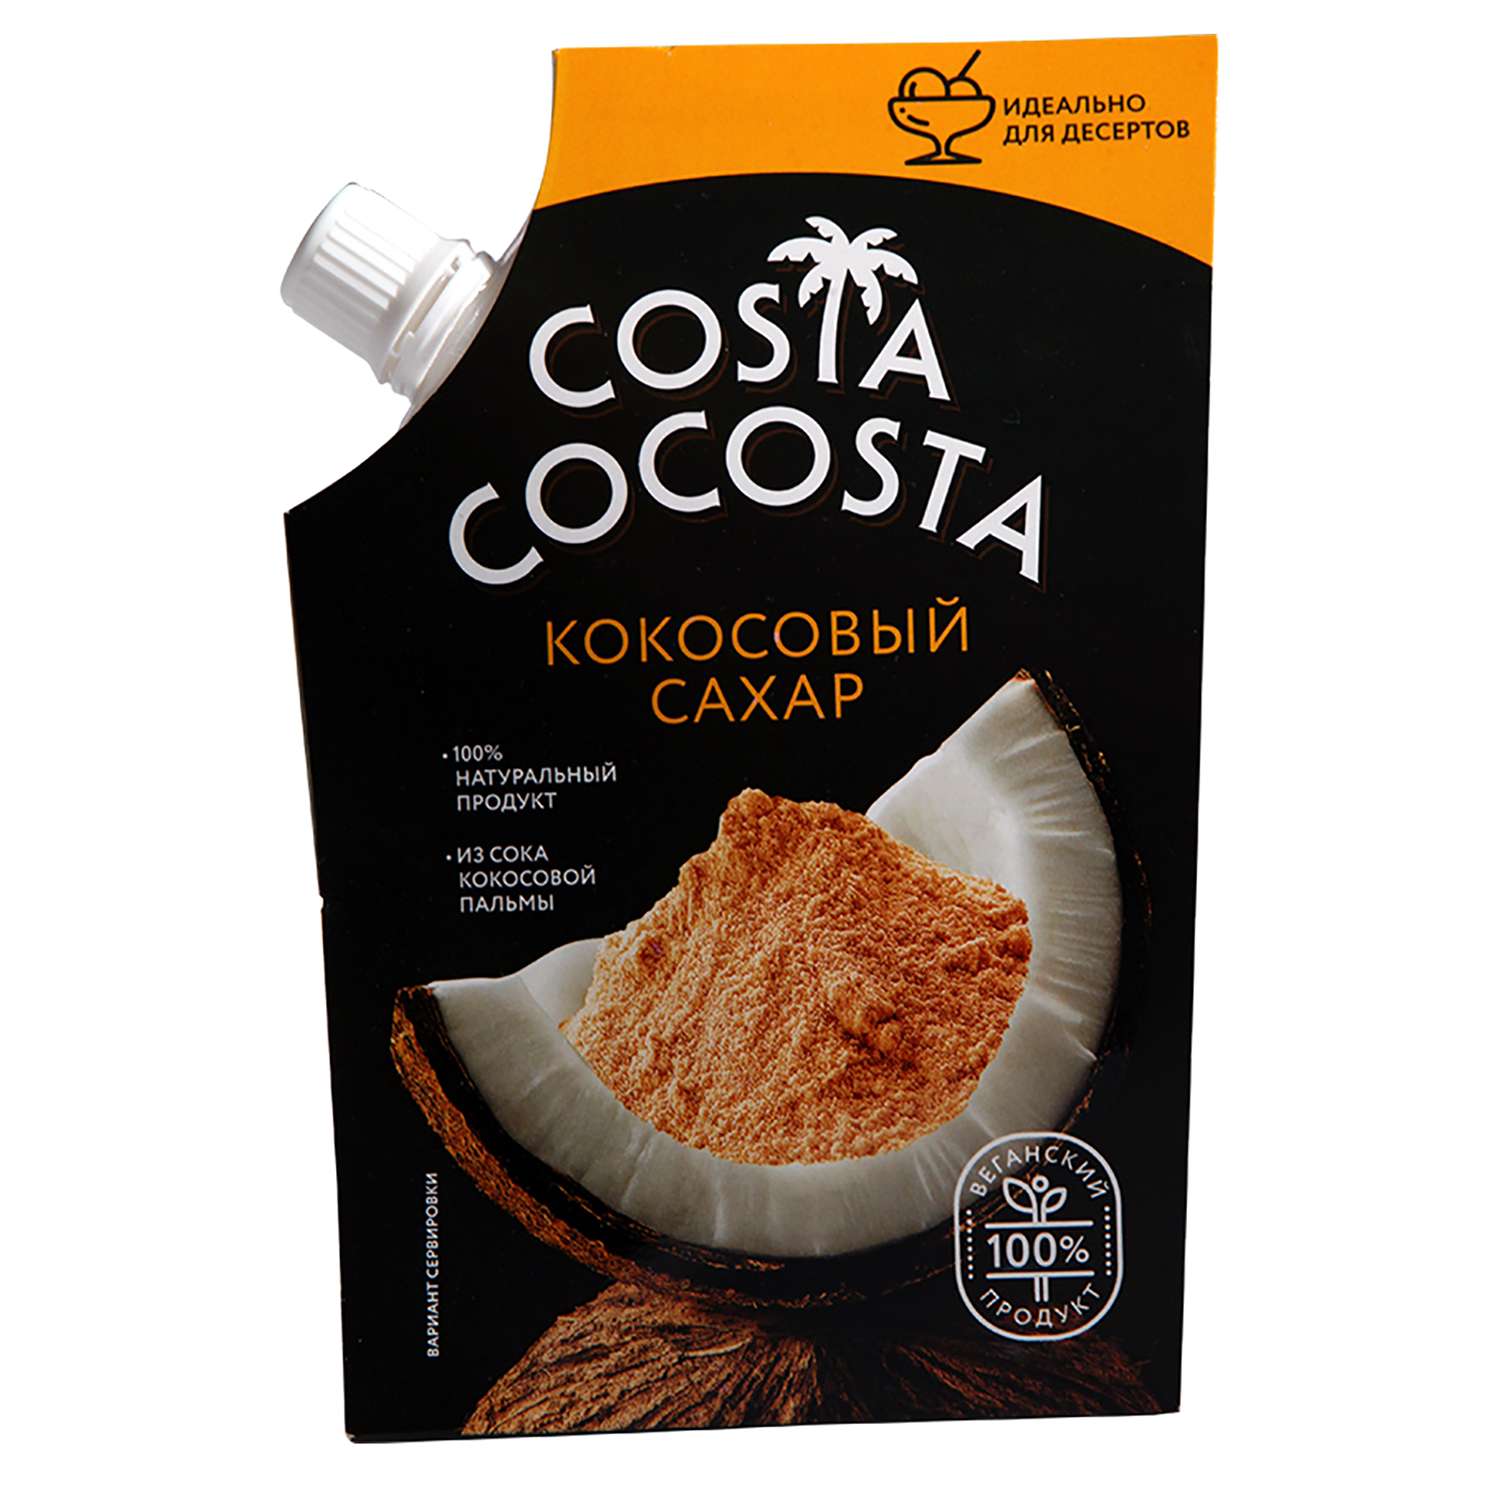 Сахар Costa Cocosta кокосовый 115г - фото 1